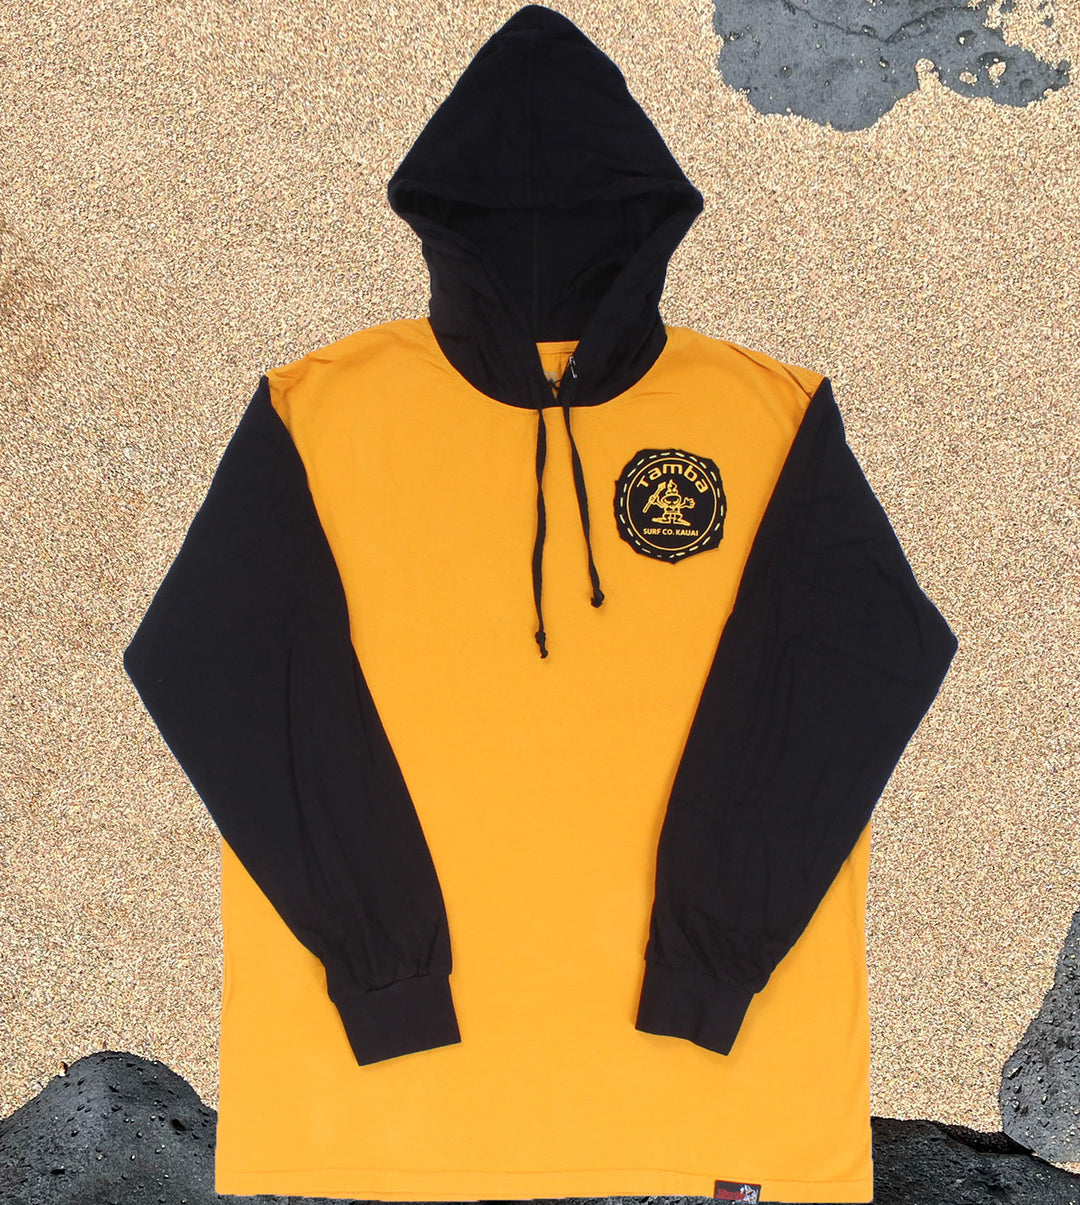 Tamba Style 4 Stitched-Print Long Sleeve Shirt Hoodie - Black/Yellow